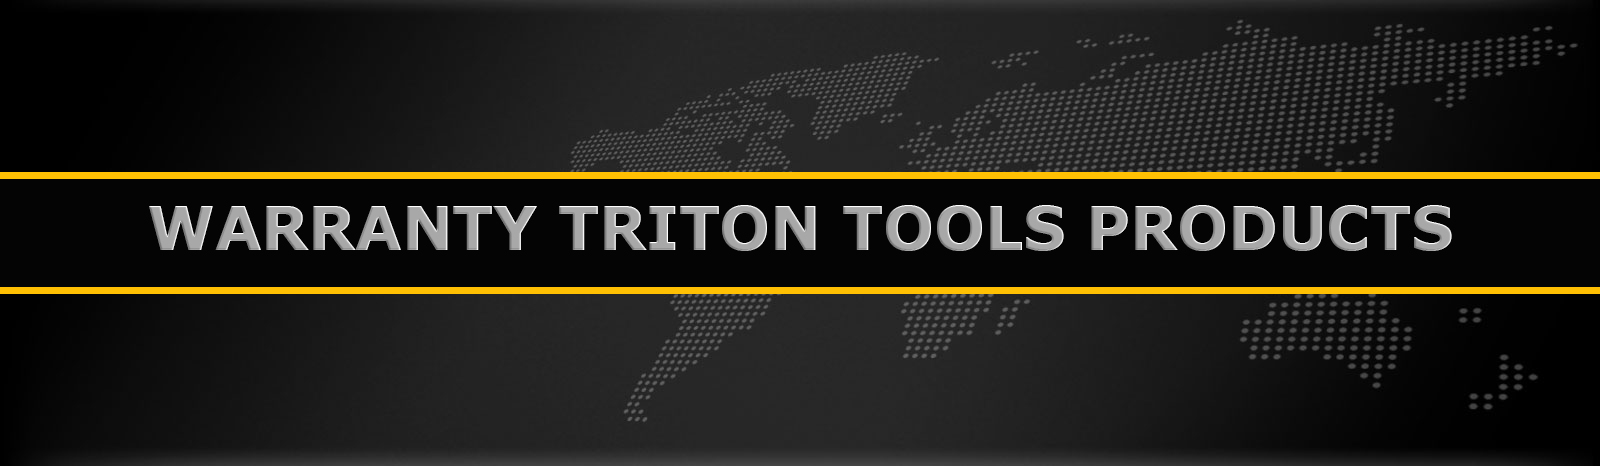 warranty triton tools products